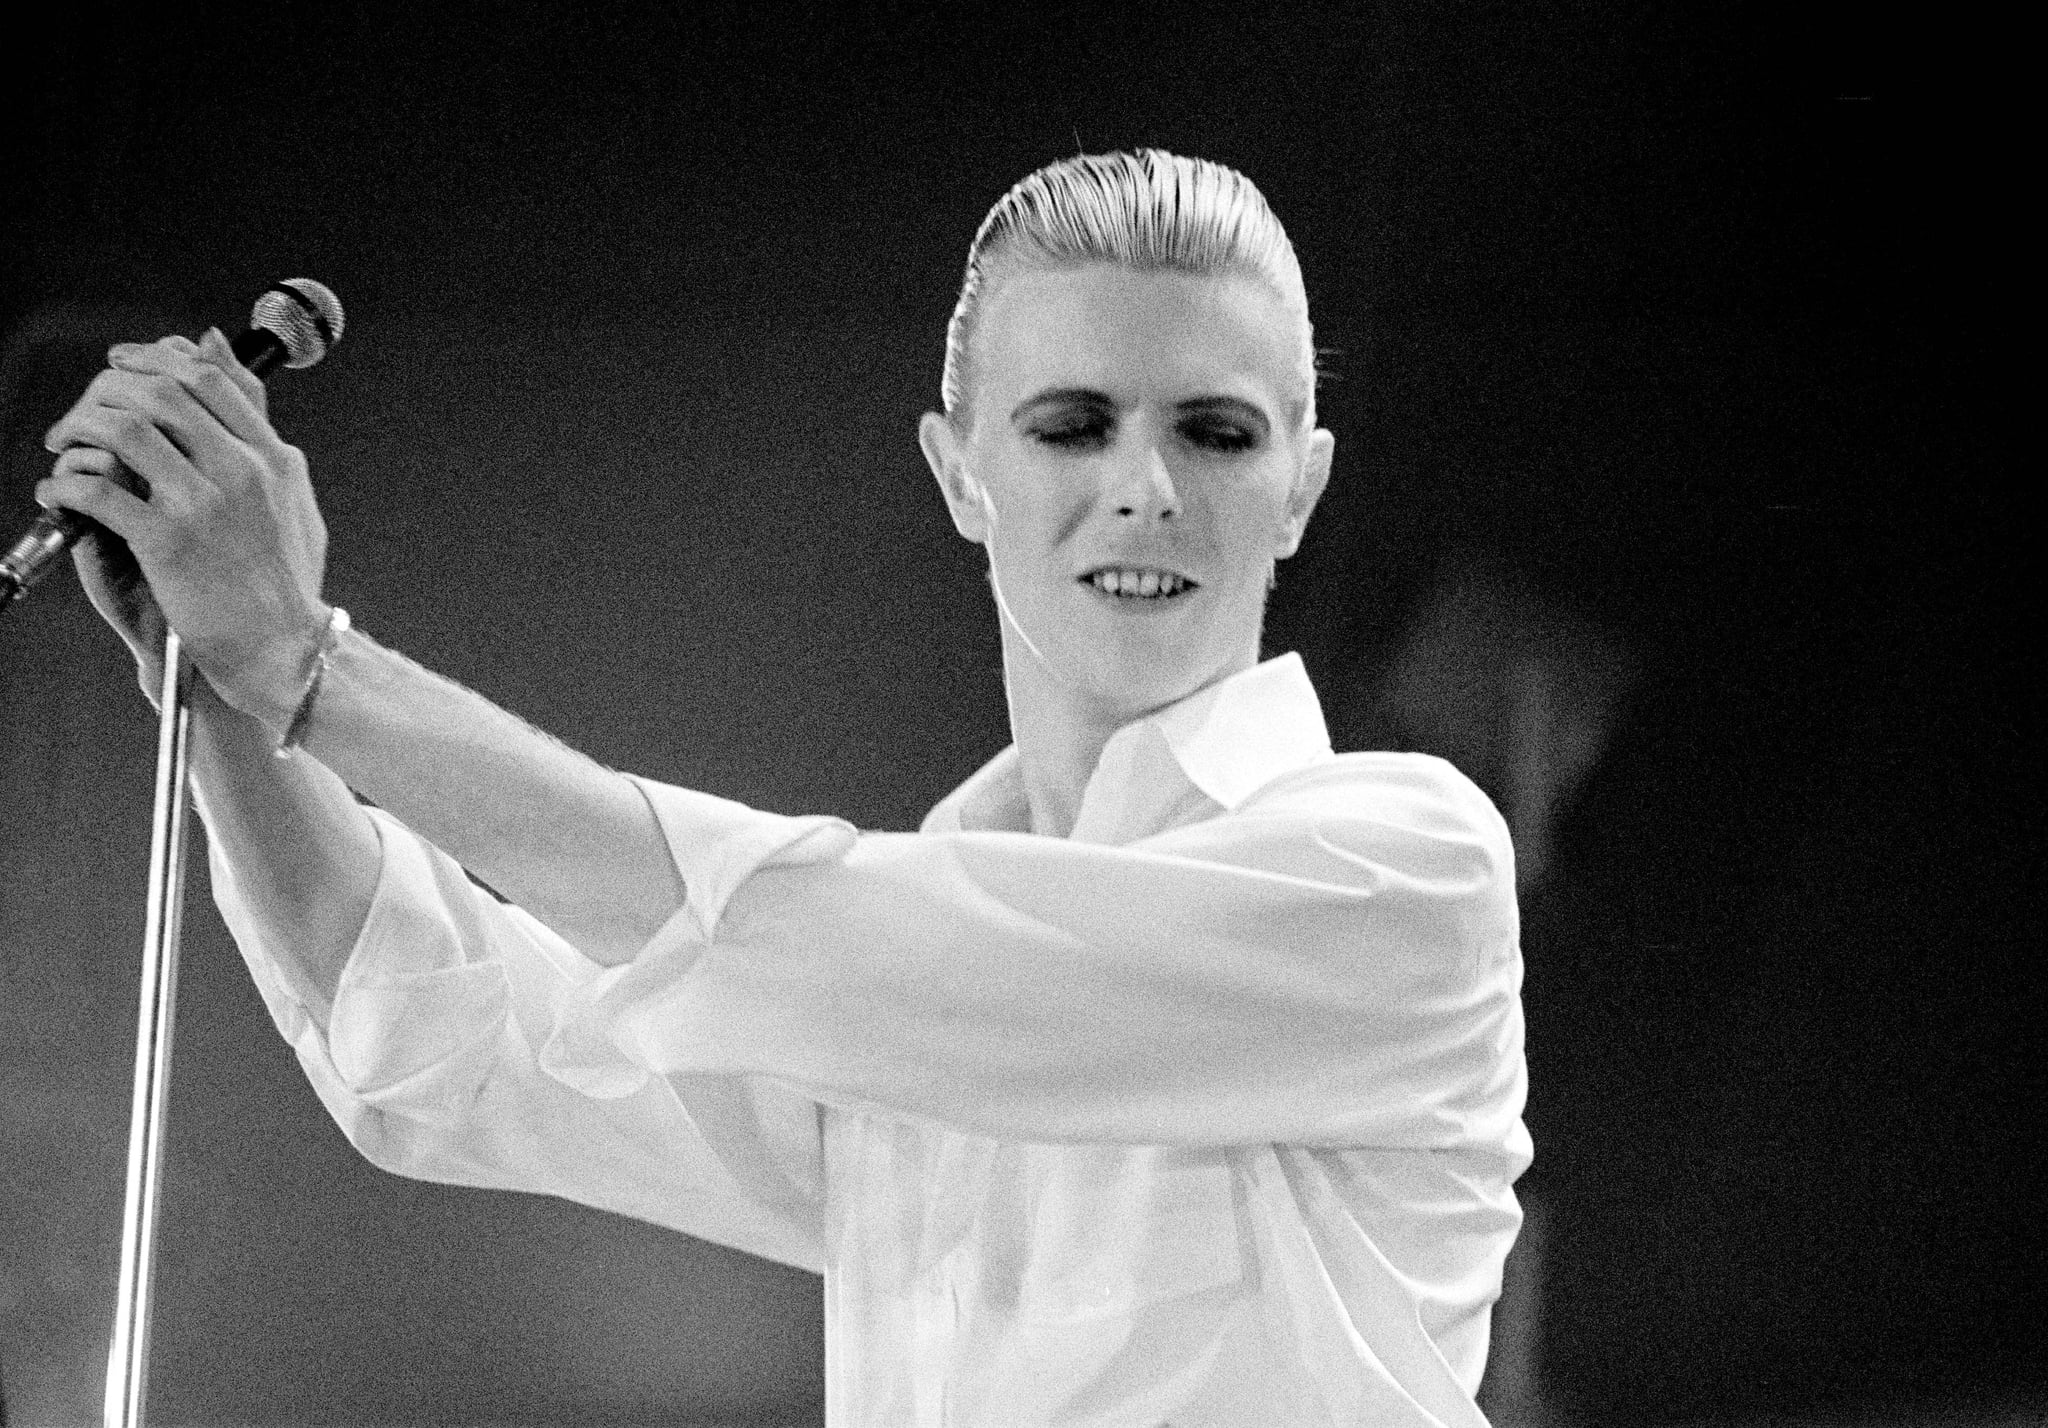 Copenhagen, Denmark - APRIL 29: David Bowie performs on stage at the Station to Station world tour in his Thin White Duke era on April 29, 1976 in Copenhagen, Denmark.  (Photo by Jorgen Engel/Redfern)